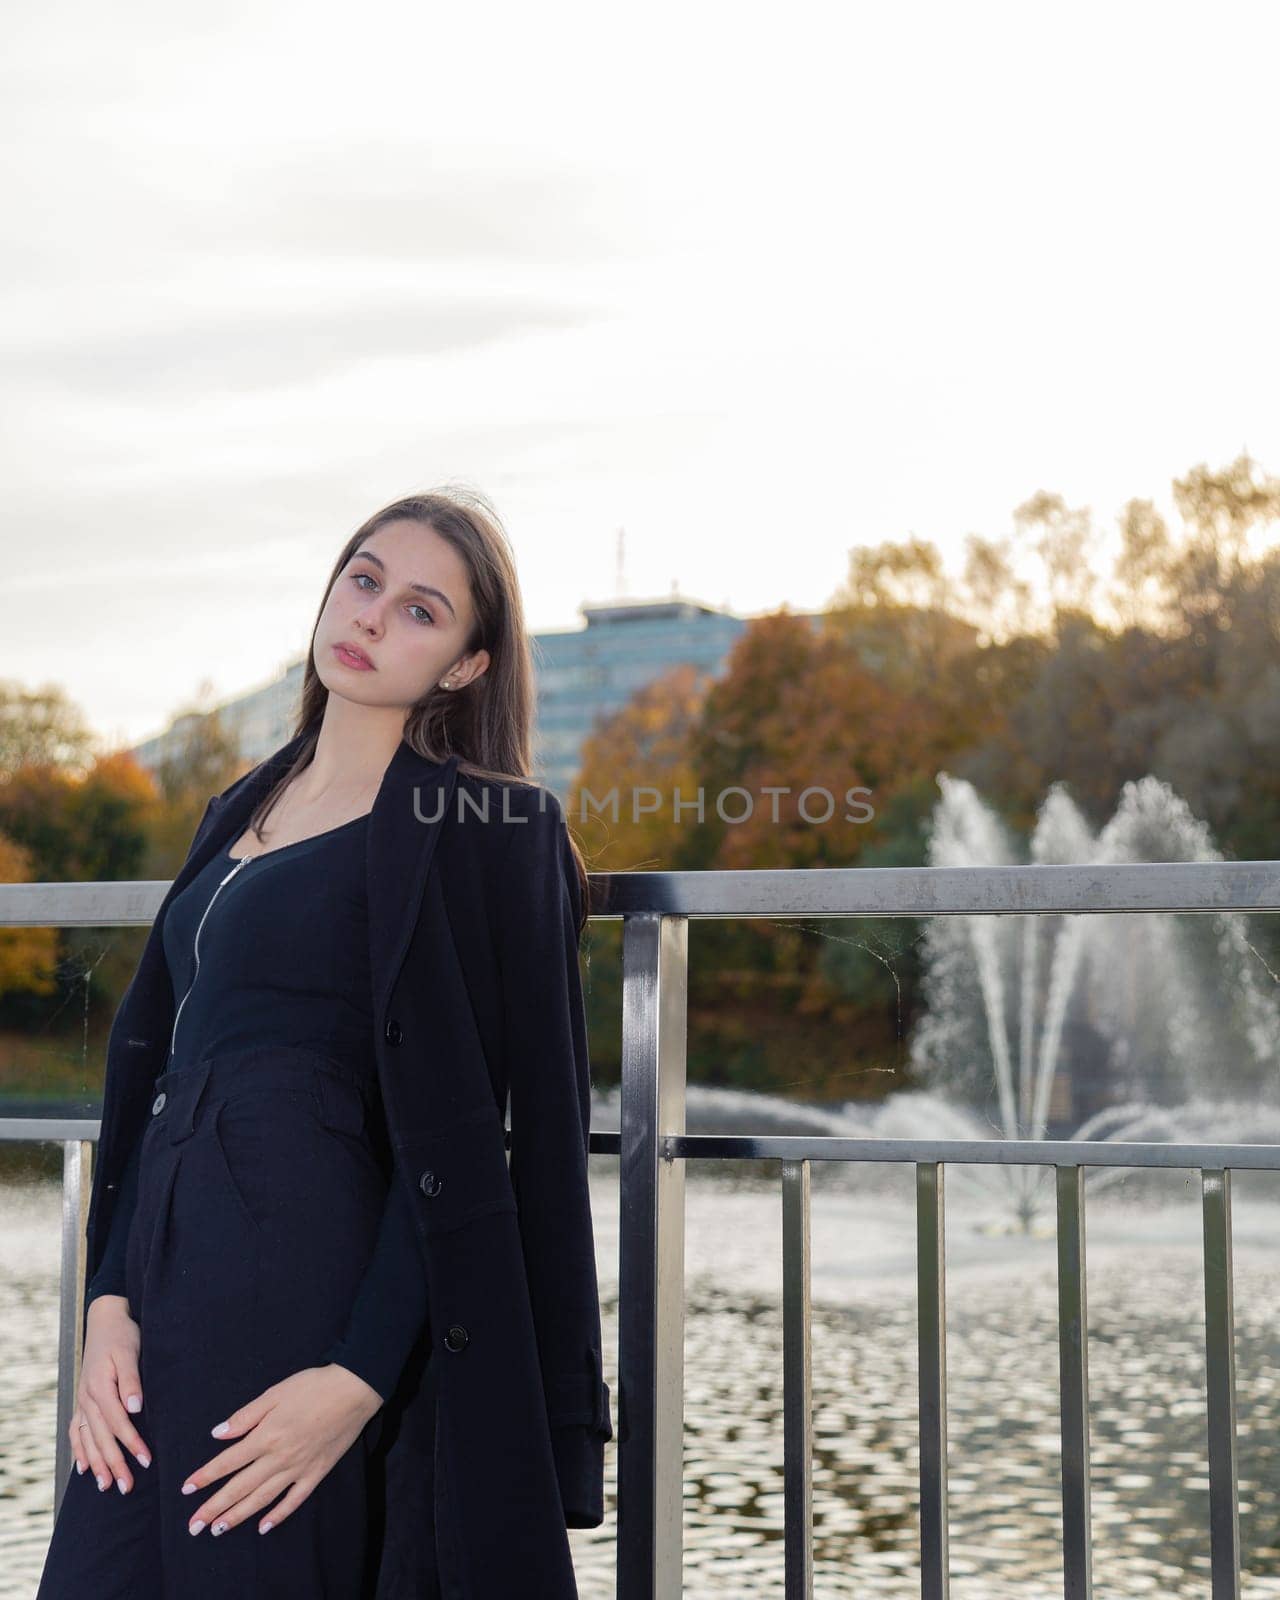 Portrait of a girl on a bridge near a pond in a city park. by Yurich32